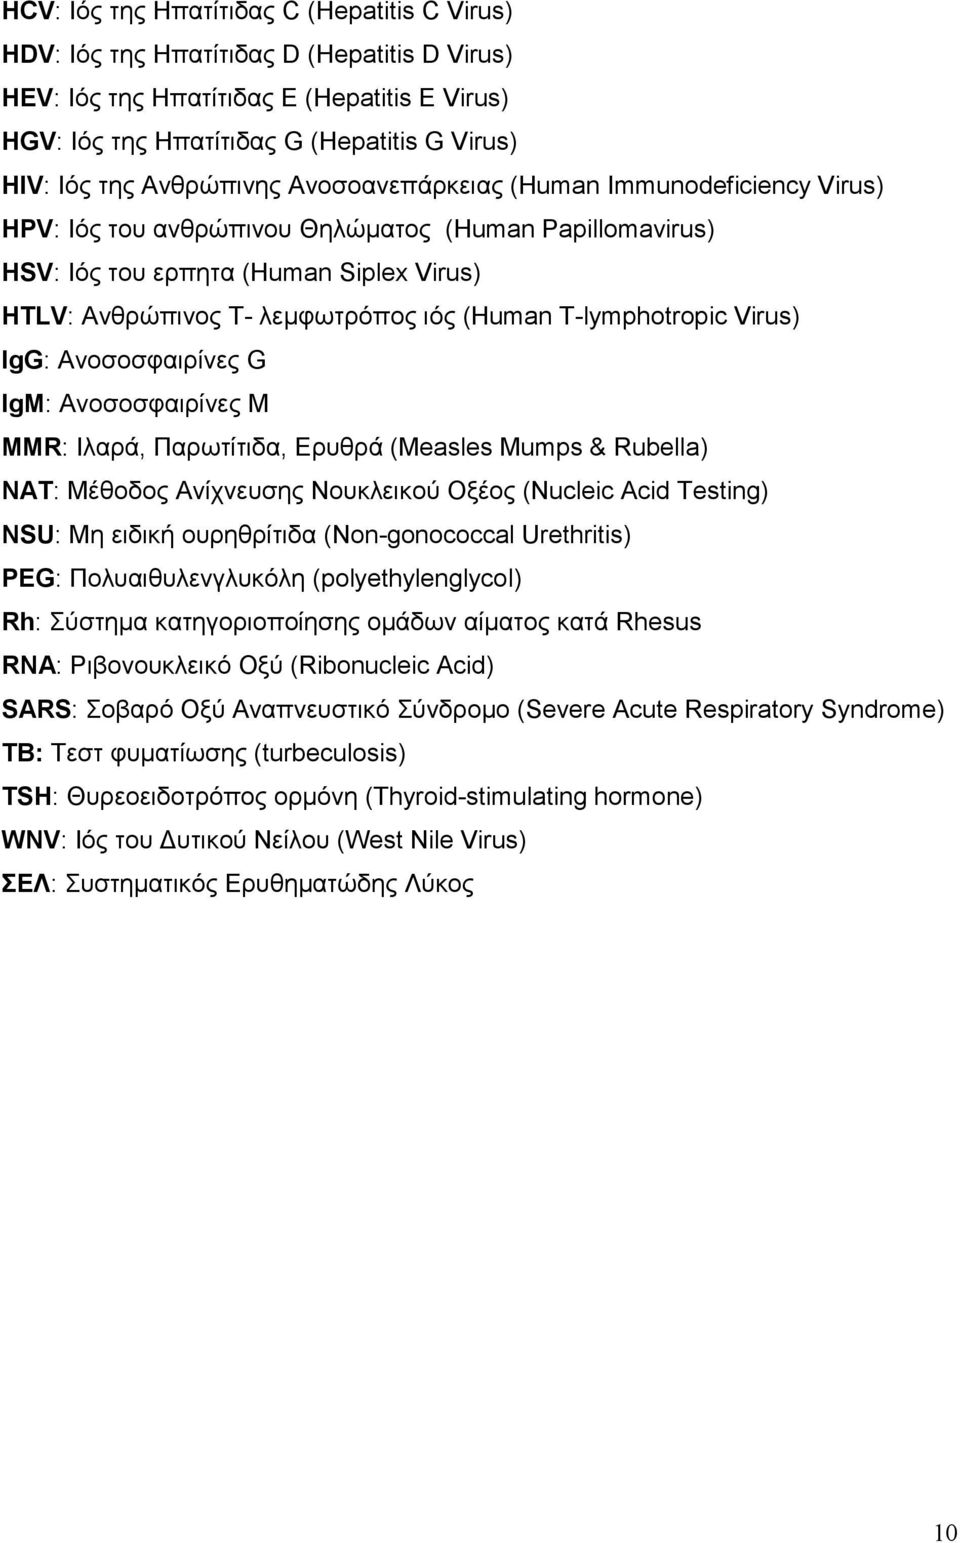 T-lymphotropic Virus) IgG: Ανοσοσφαιρίνες G IgM: Ανοσοσφαιρίνες M MMR: Ιλαρά, Παρωτίτιδα, Ερυθρά (Measles Mumps & Rubella) NAT: Μέθοδος Ανίχνευσης Νουκλεικού Οξέoς (Nucleic Acid Testing) NSU: Μη